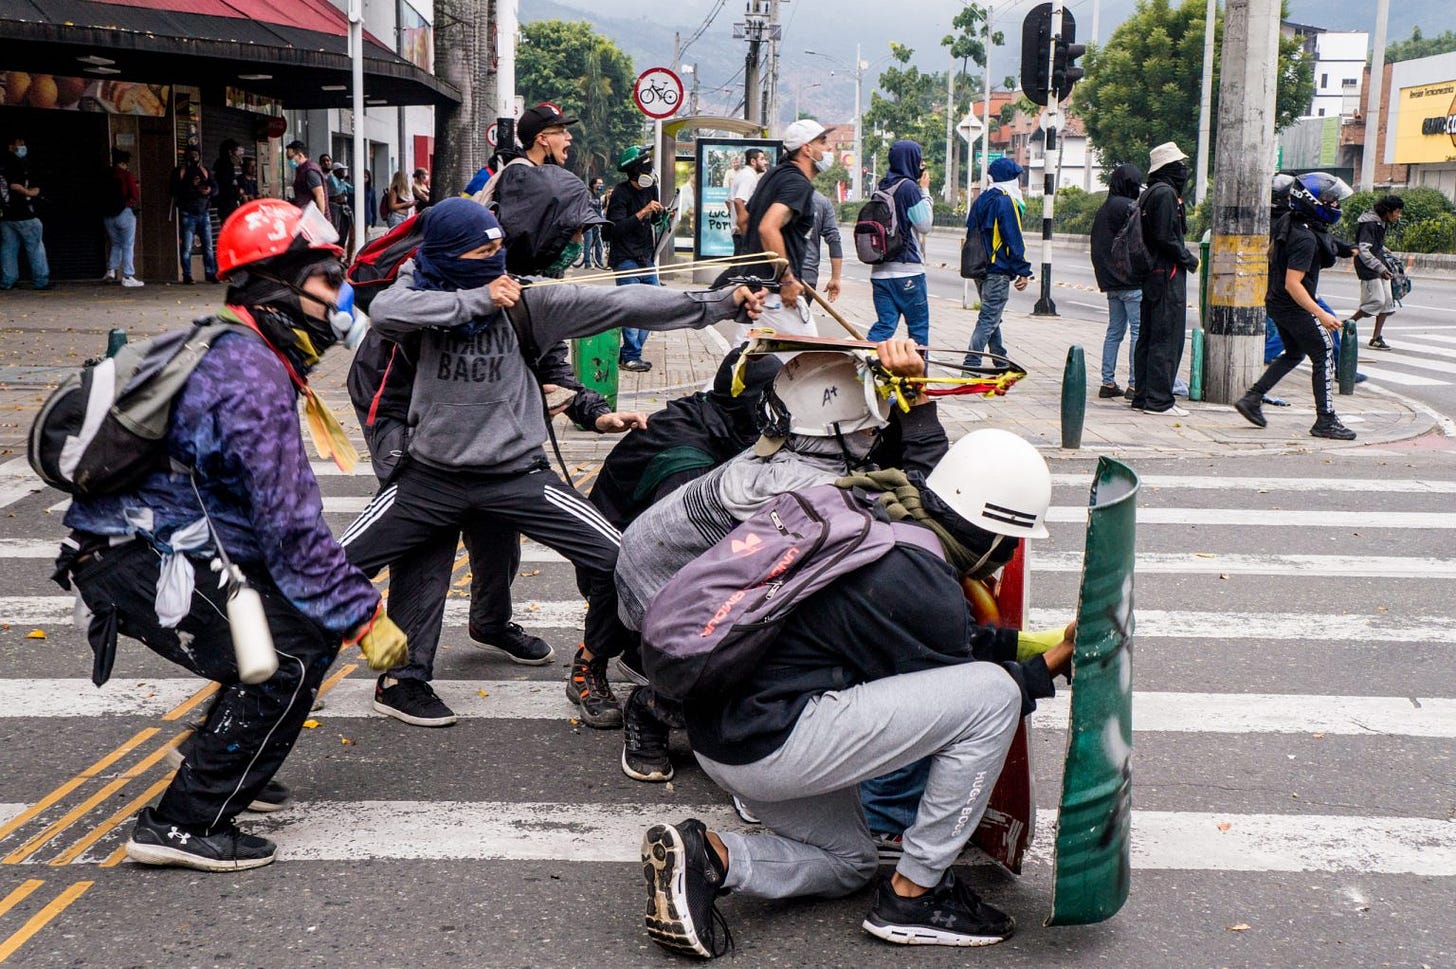 Front line protestors in Medellin, Colombia in 2021. Photo credit: Roger.Rondon / Shutterstock.com